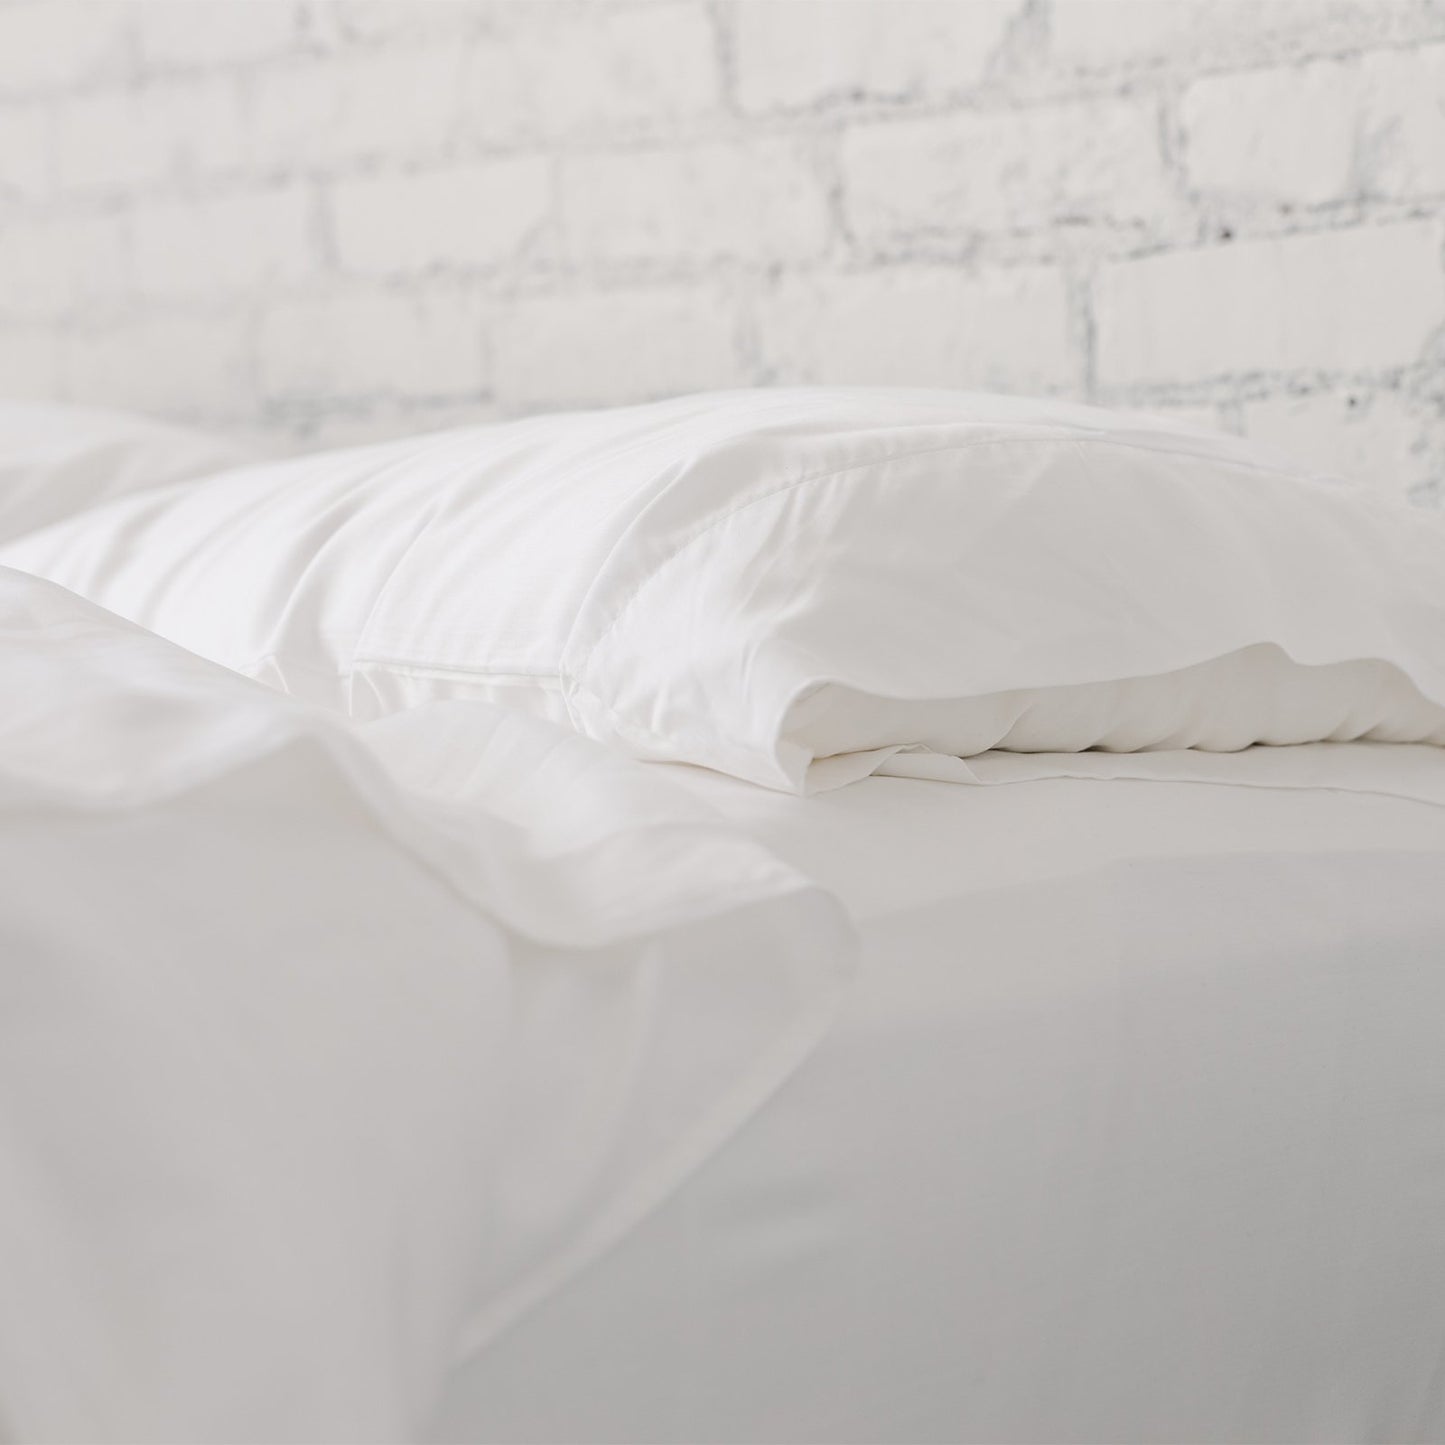 silk pillows on a bed